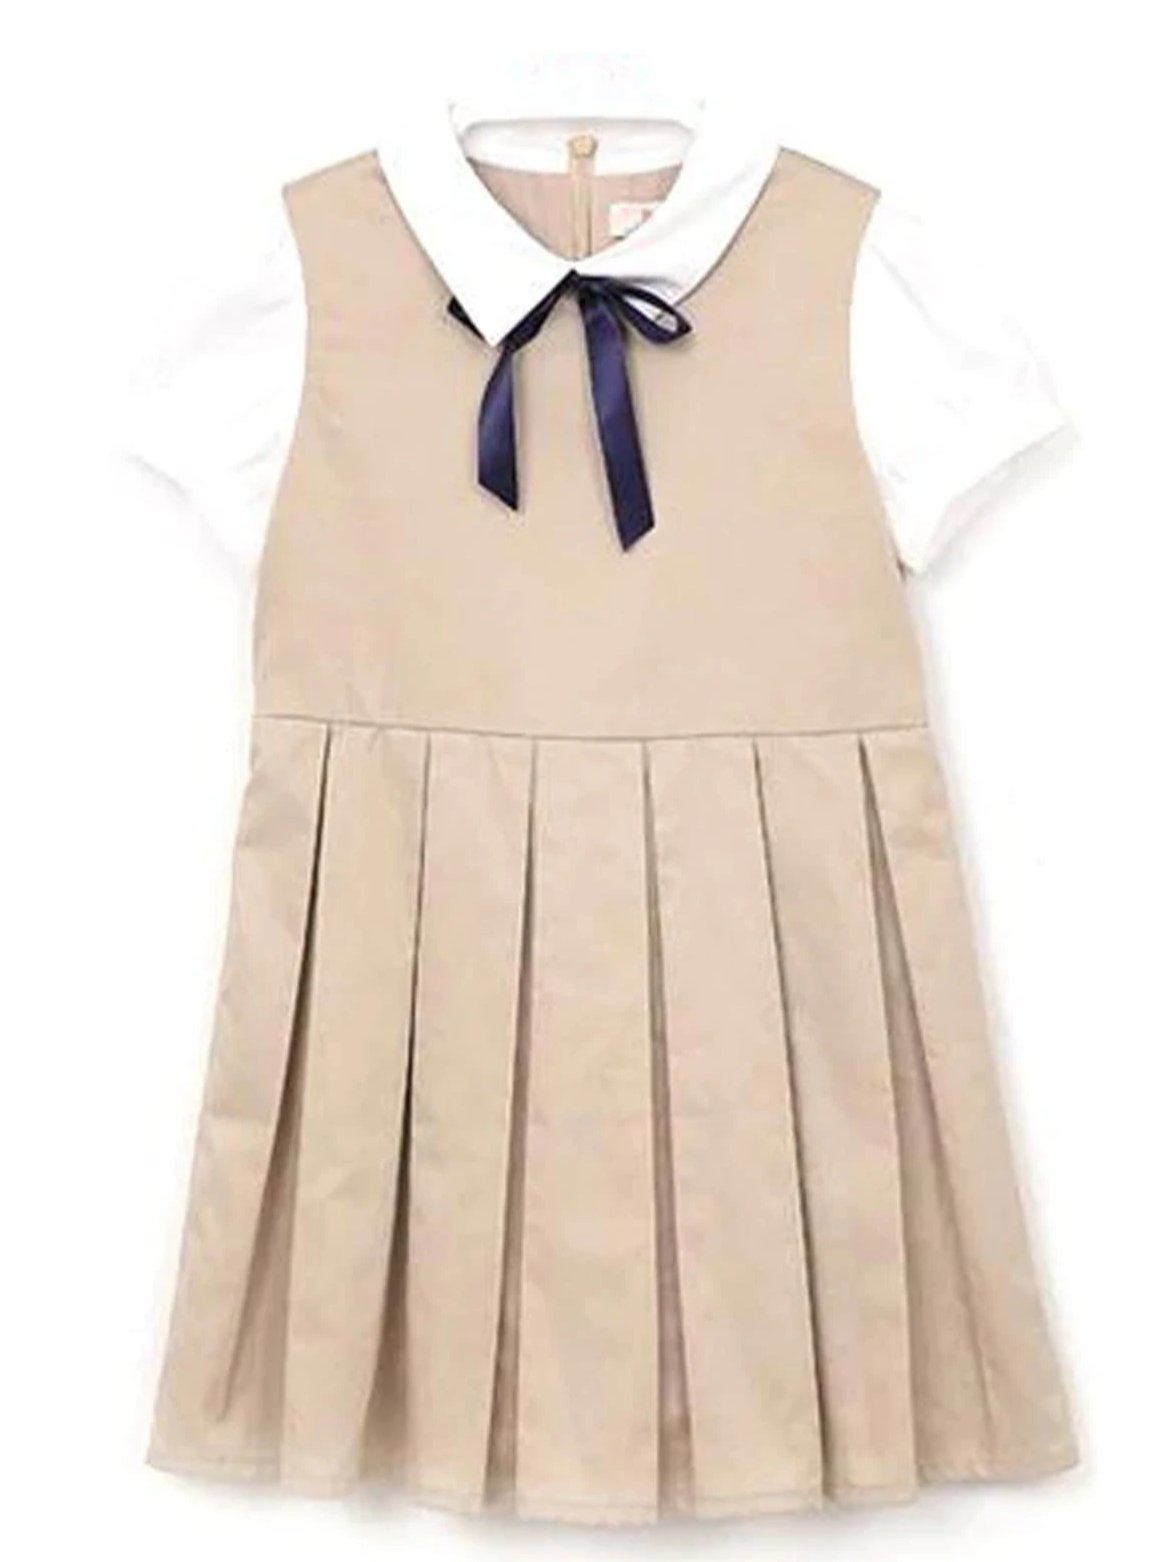 Girls Preppy Bow Tie Collar Pleated A-Line School Girl Uniform Dress - Brown / 3T - Girls Fall Casual Dress